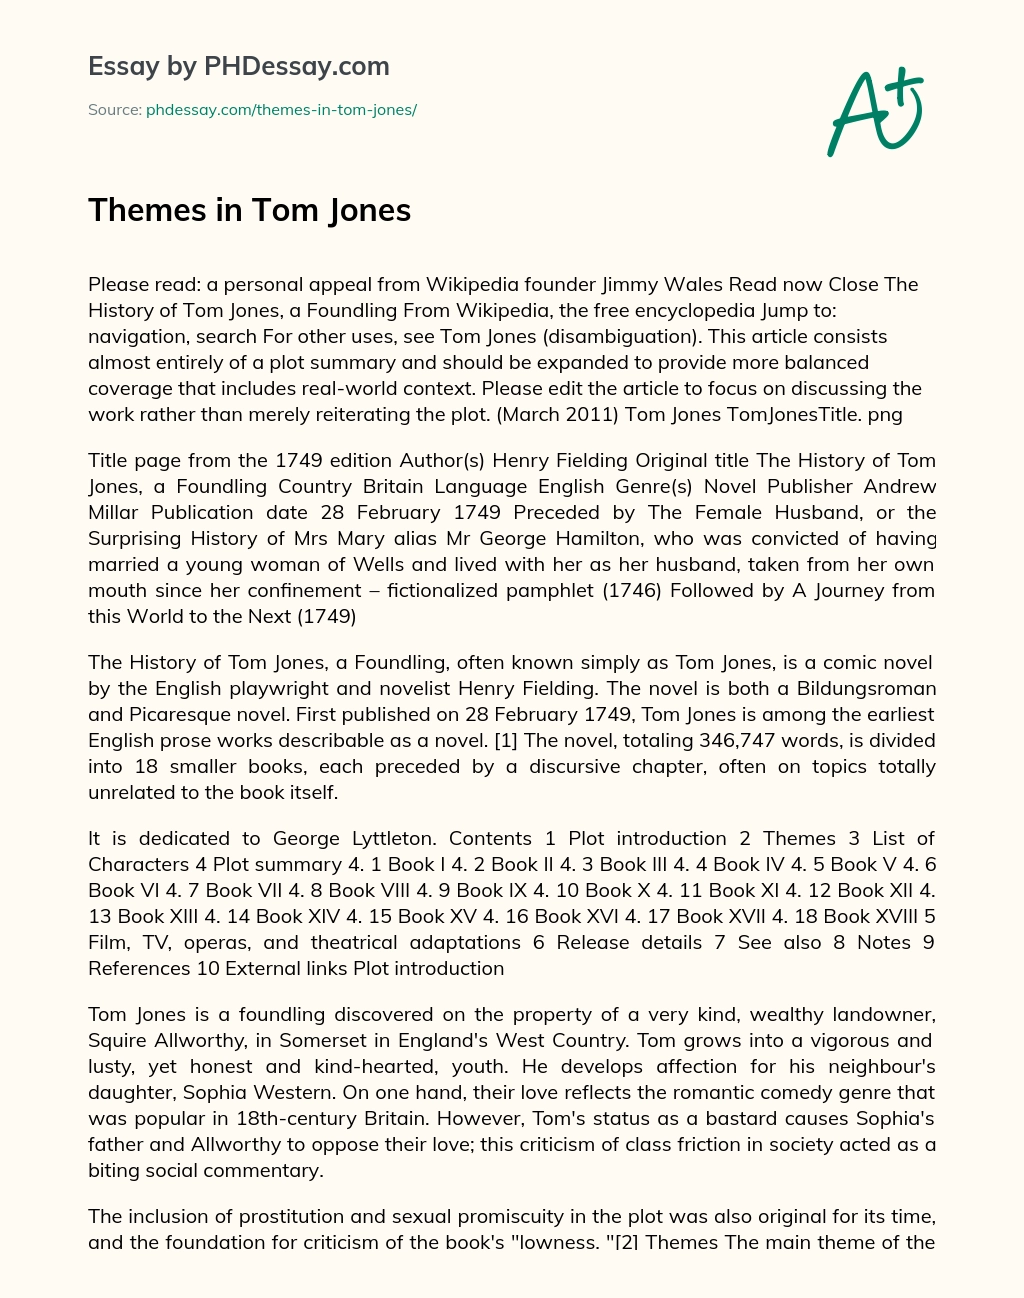 Themes in Tom Jones essay